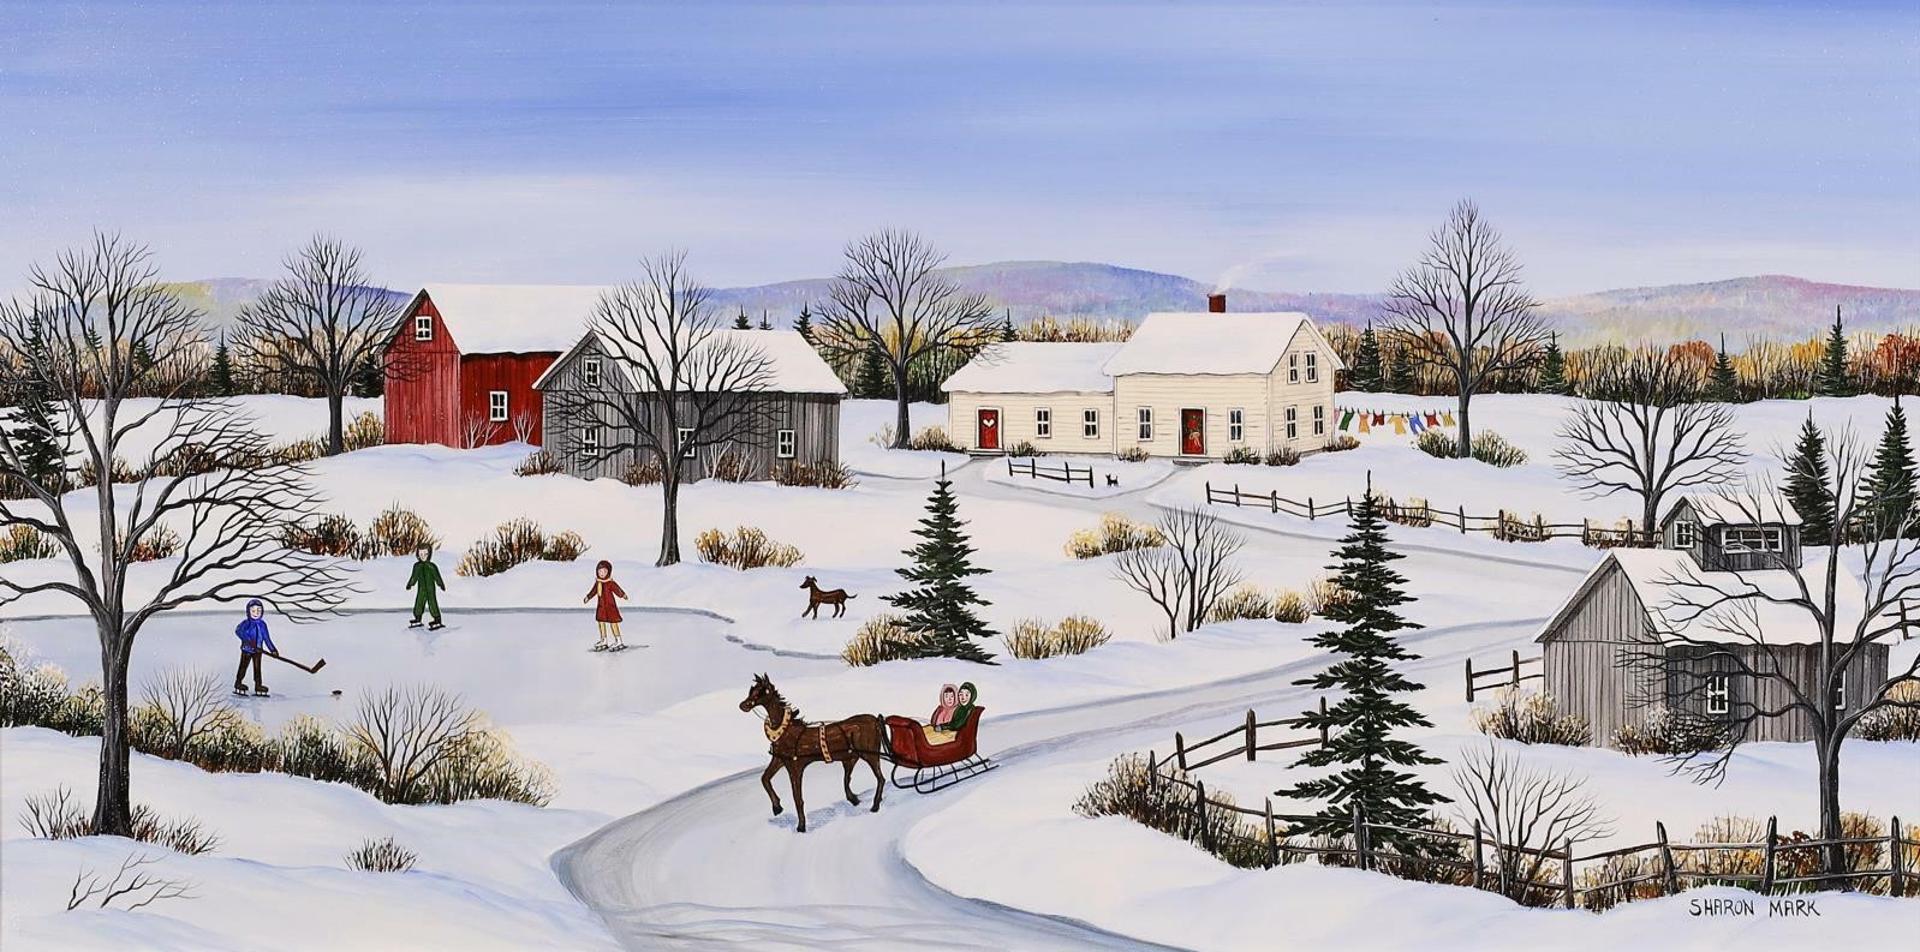 Sharon Mark (1955) - New England Winter; 2000